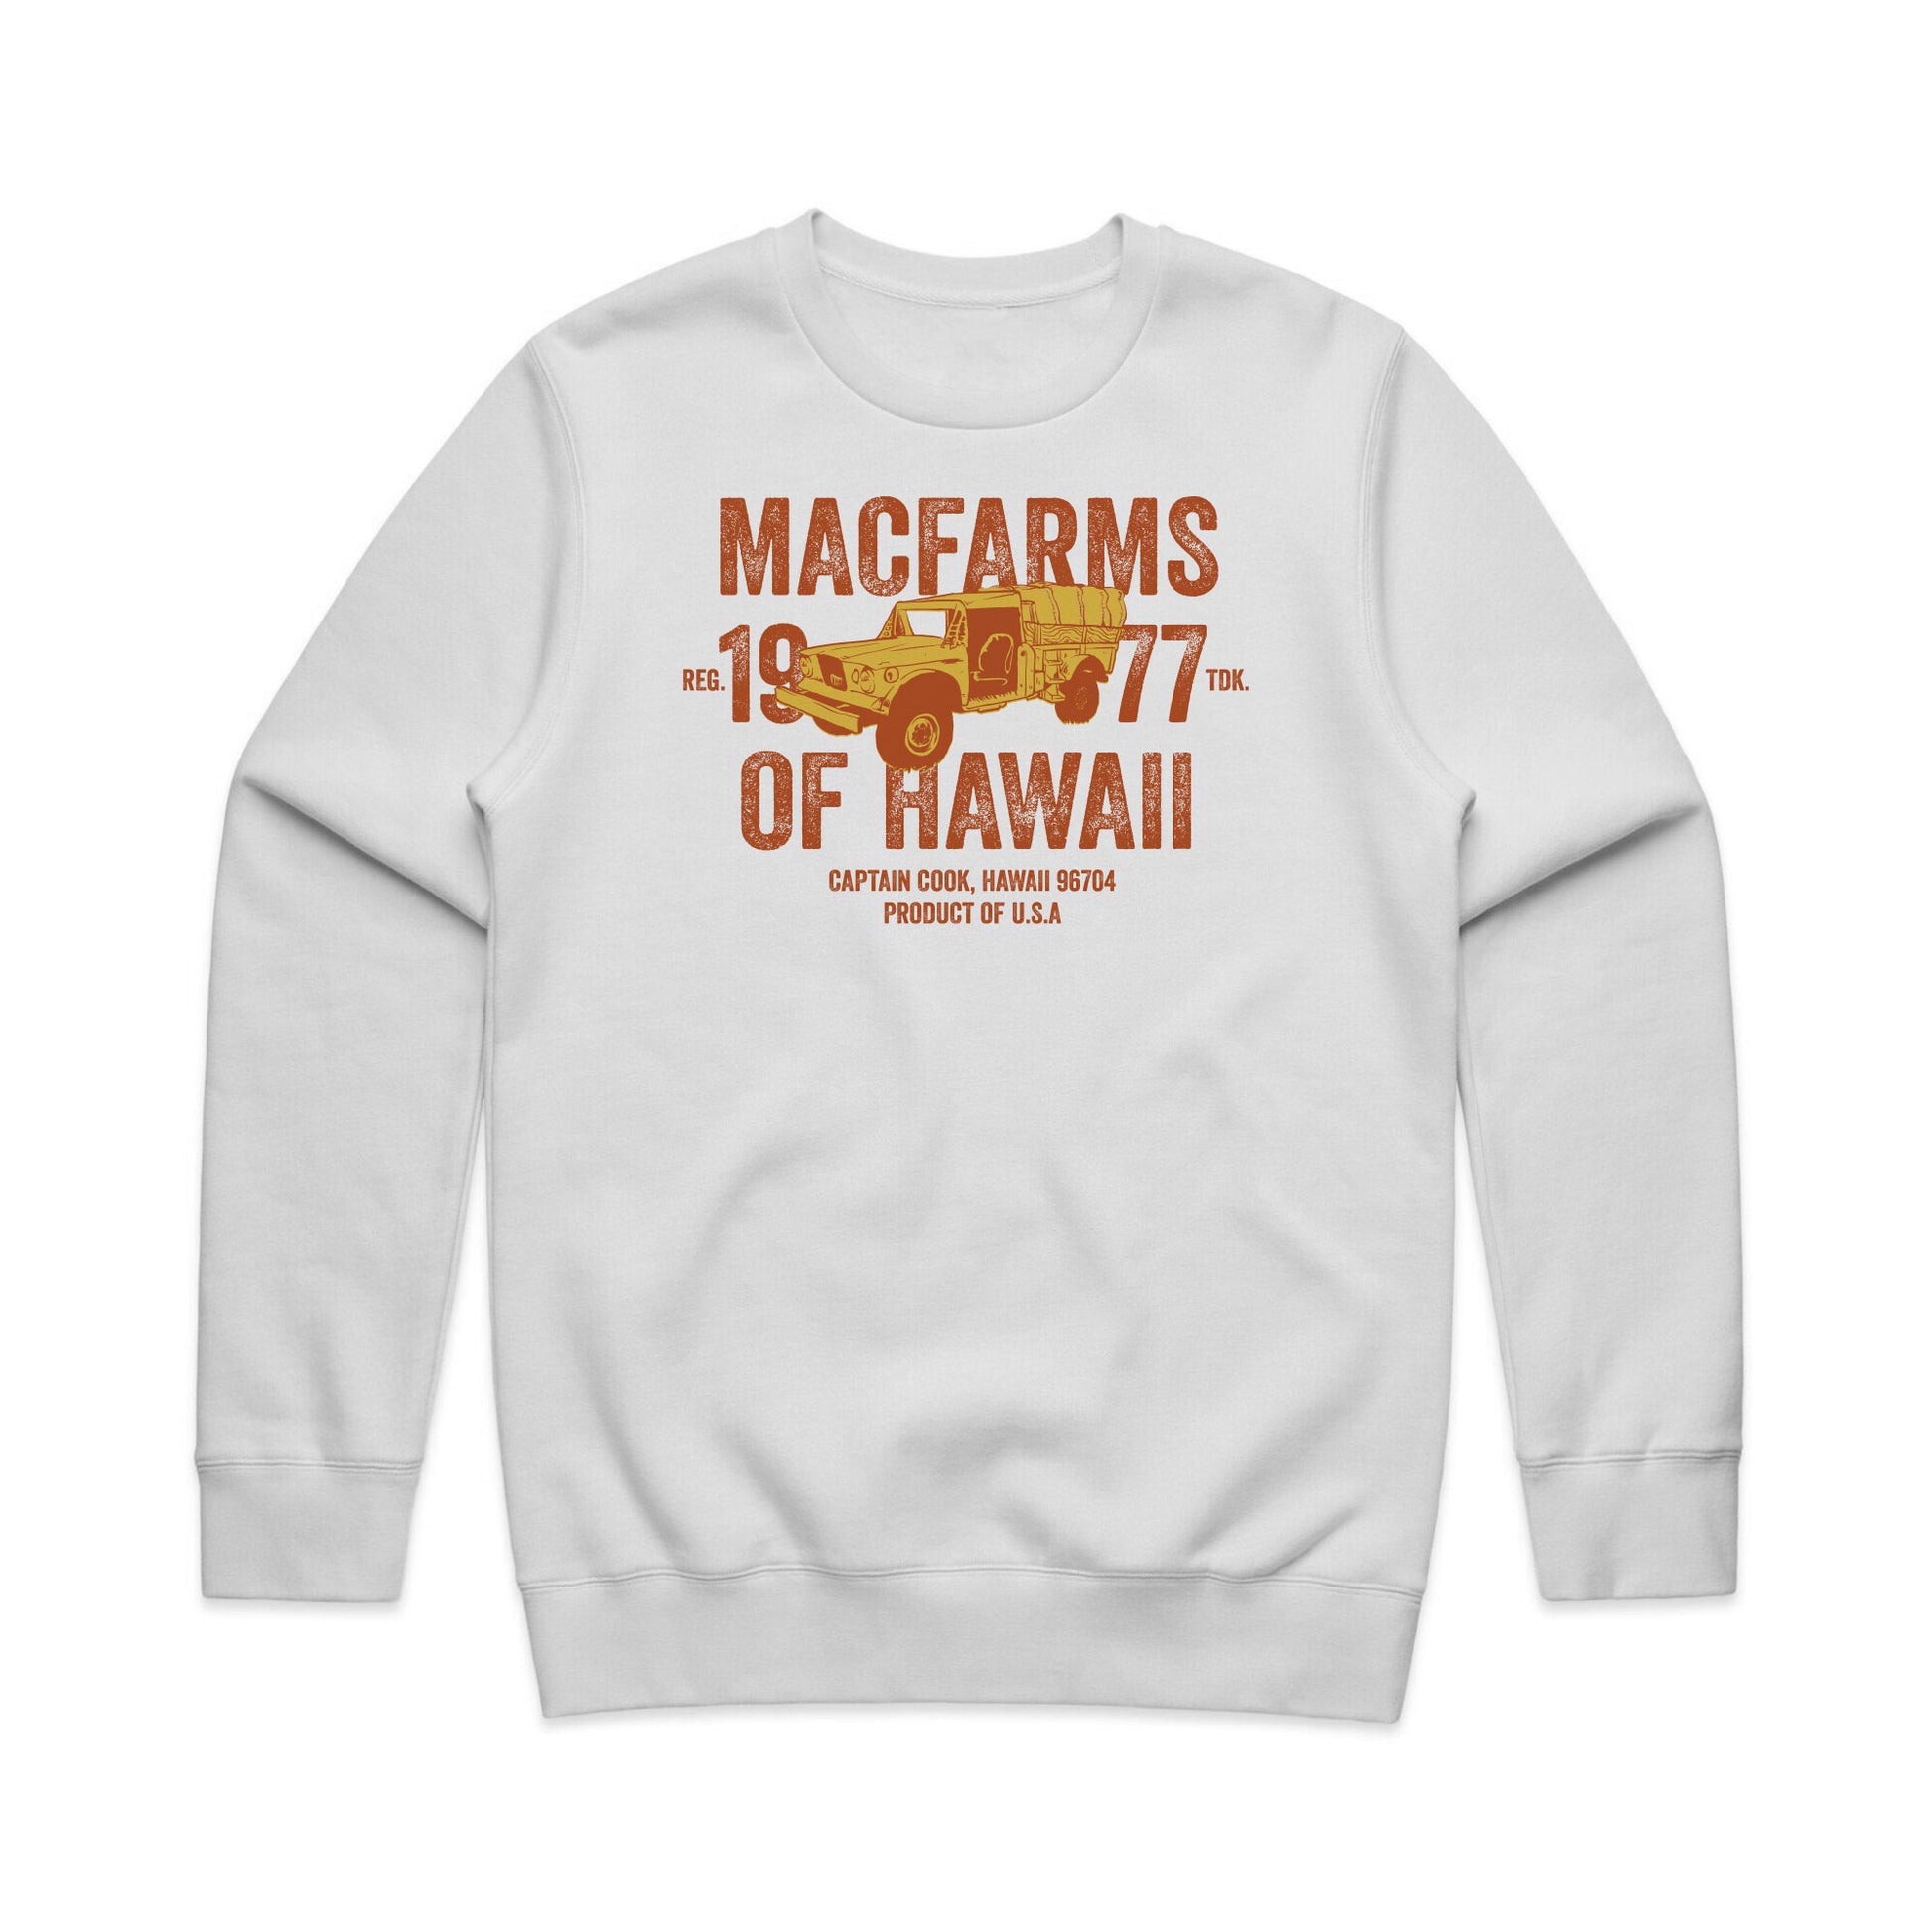 MacFarms white crewneck sweater. MacFarms of Hawaii since 1977